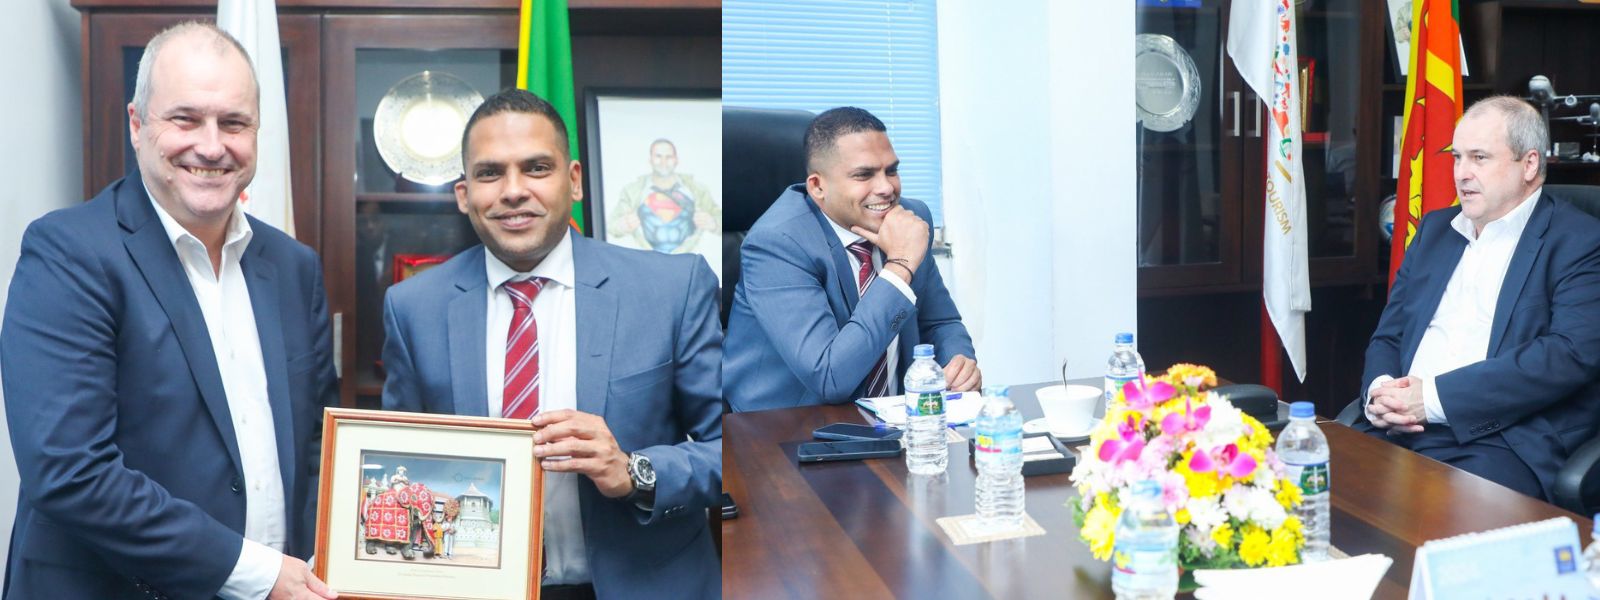 Sri Lanka Sports Minister meets ICC CEO